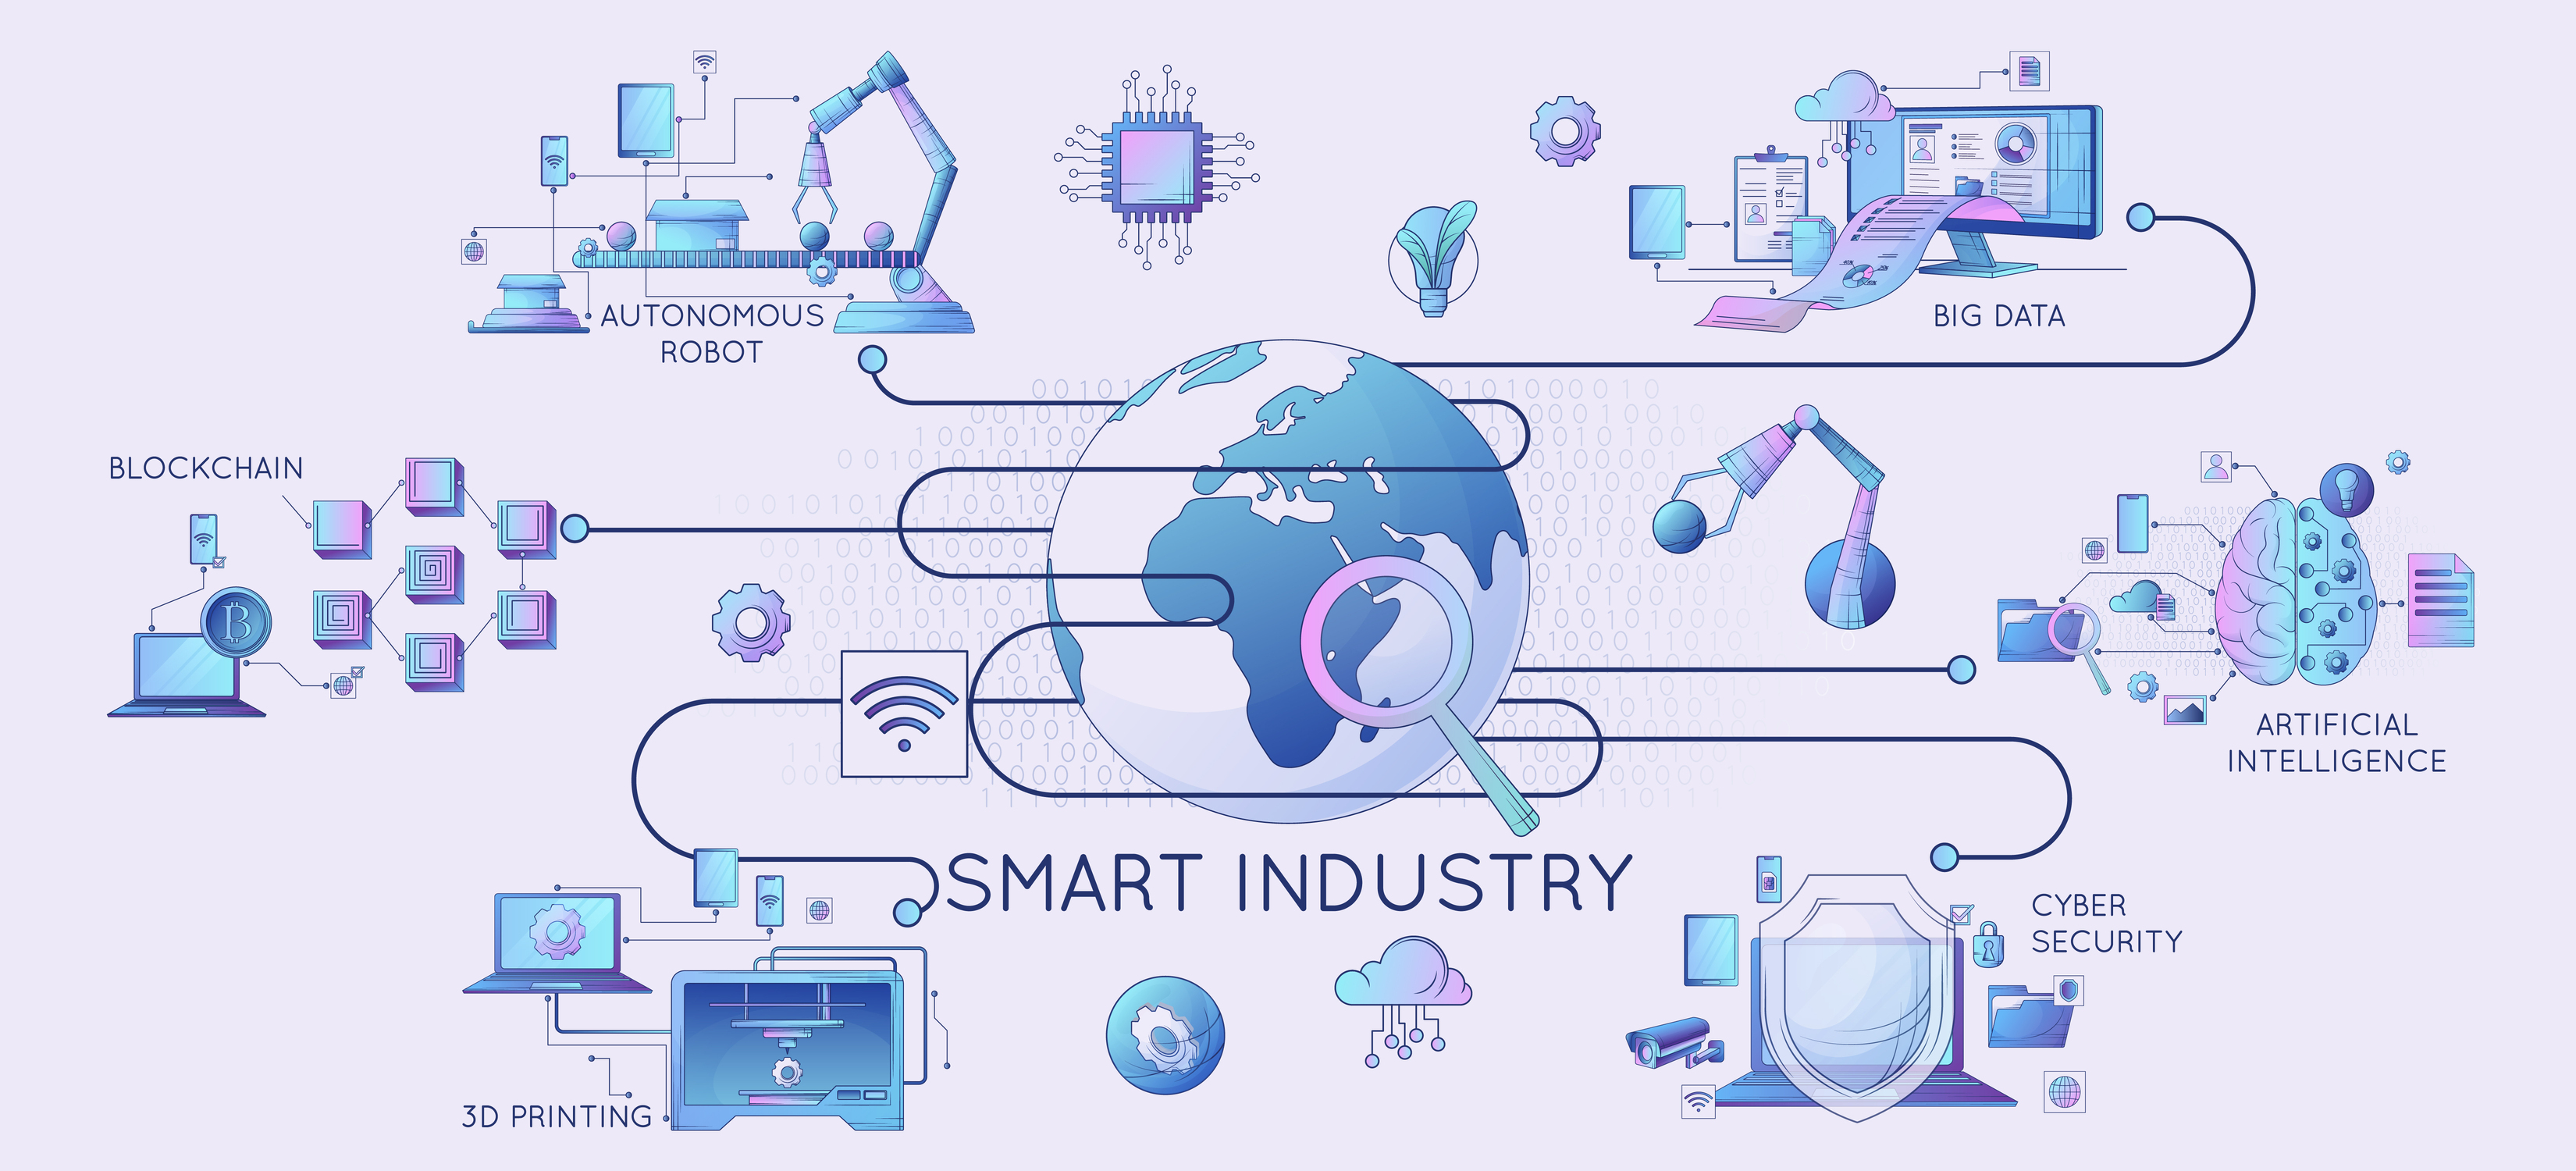 Smart industry industria flat line 4 0